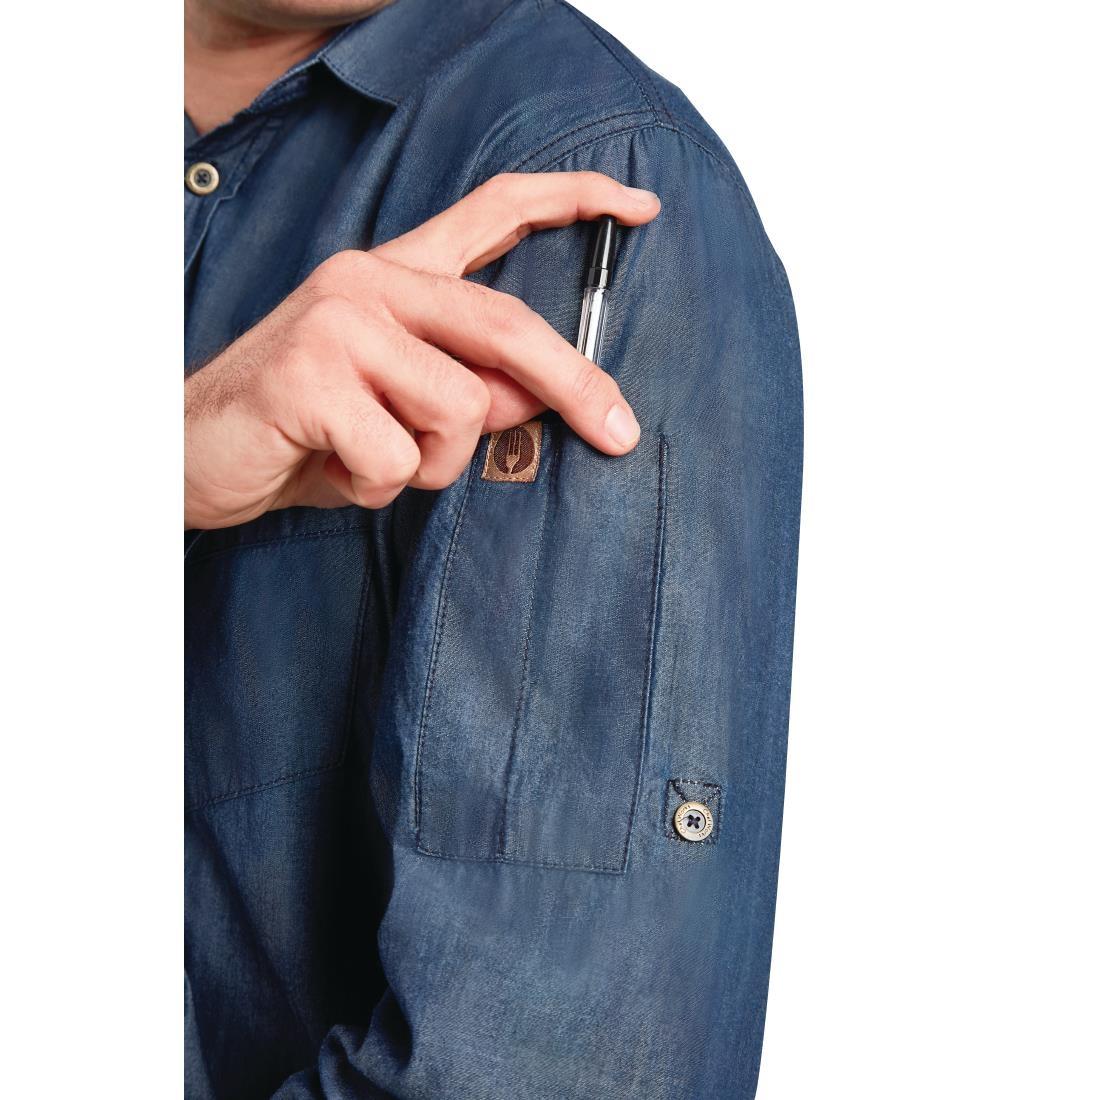 Chef Works Urban Detroit Long Sleeve Denim Shirt Blue S - B776-S  - 4